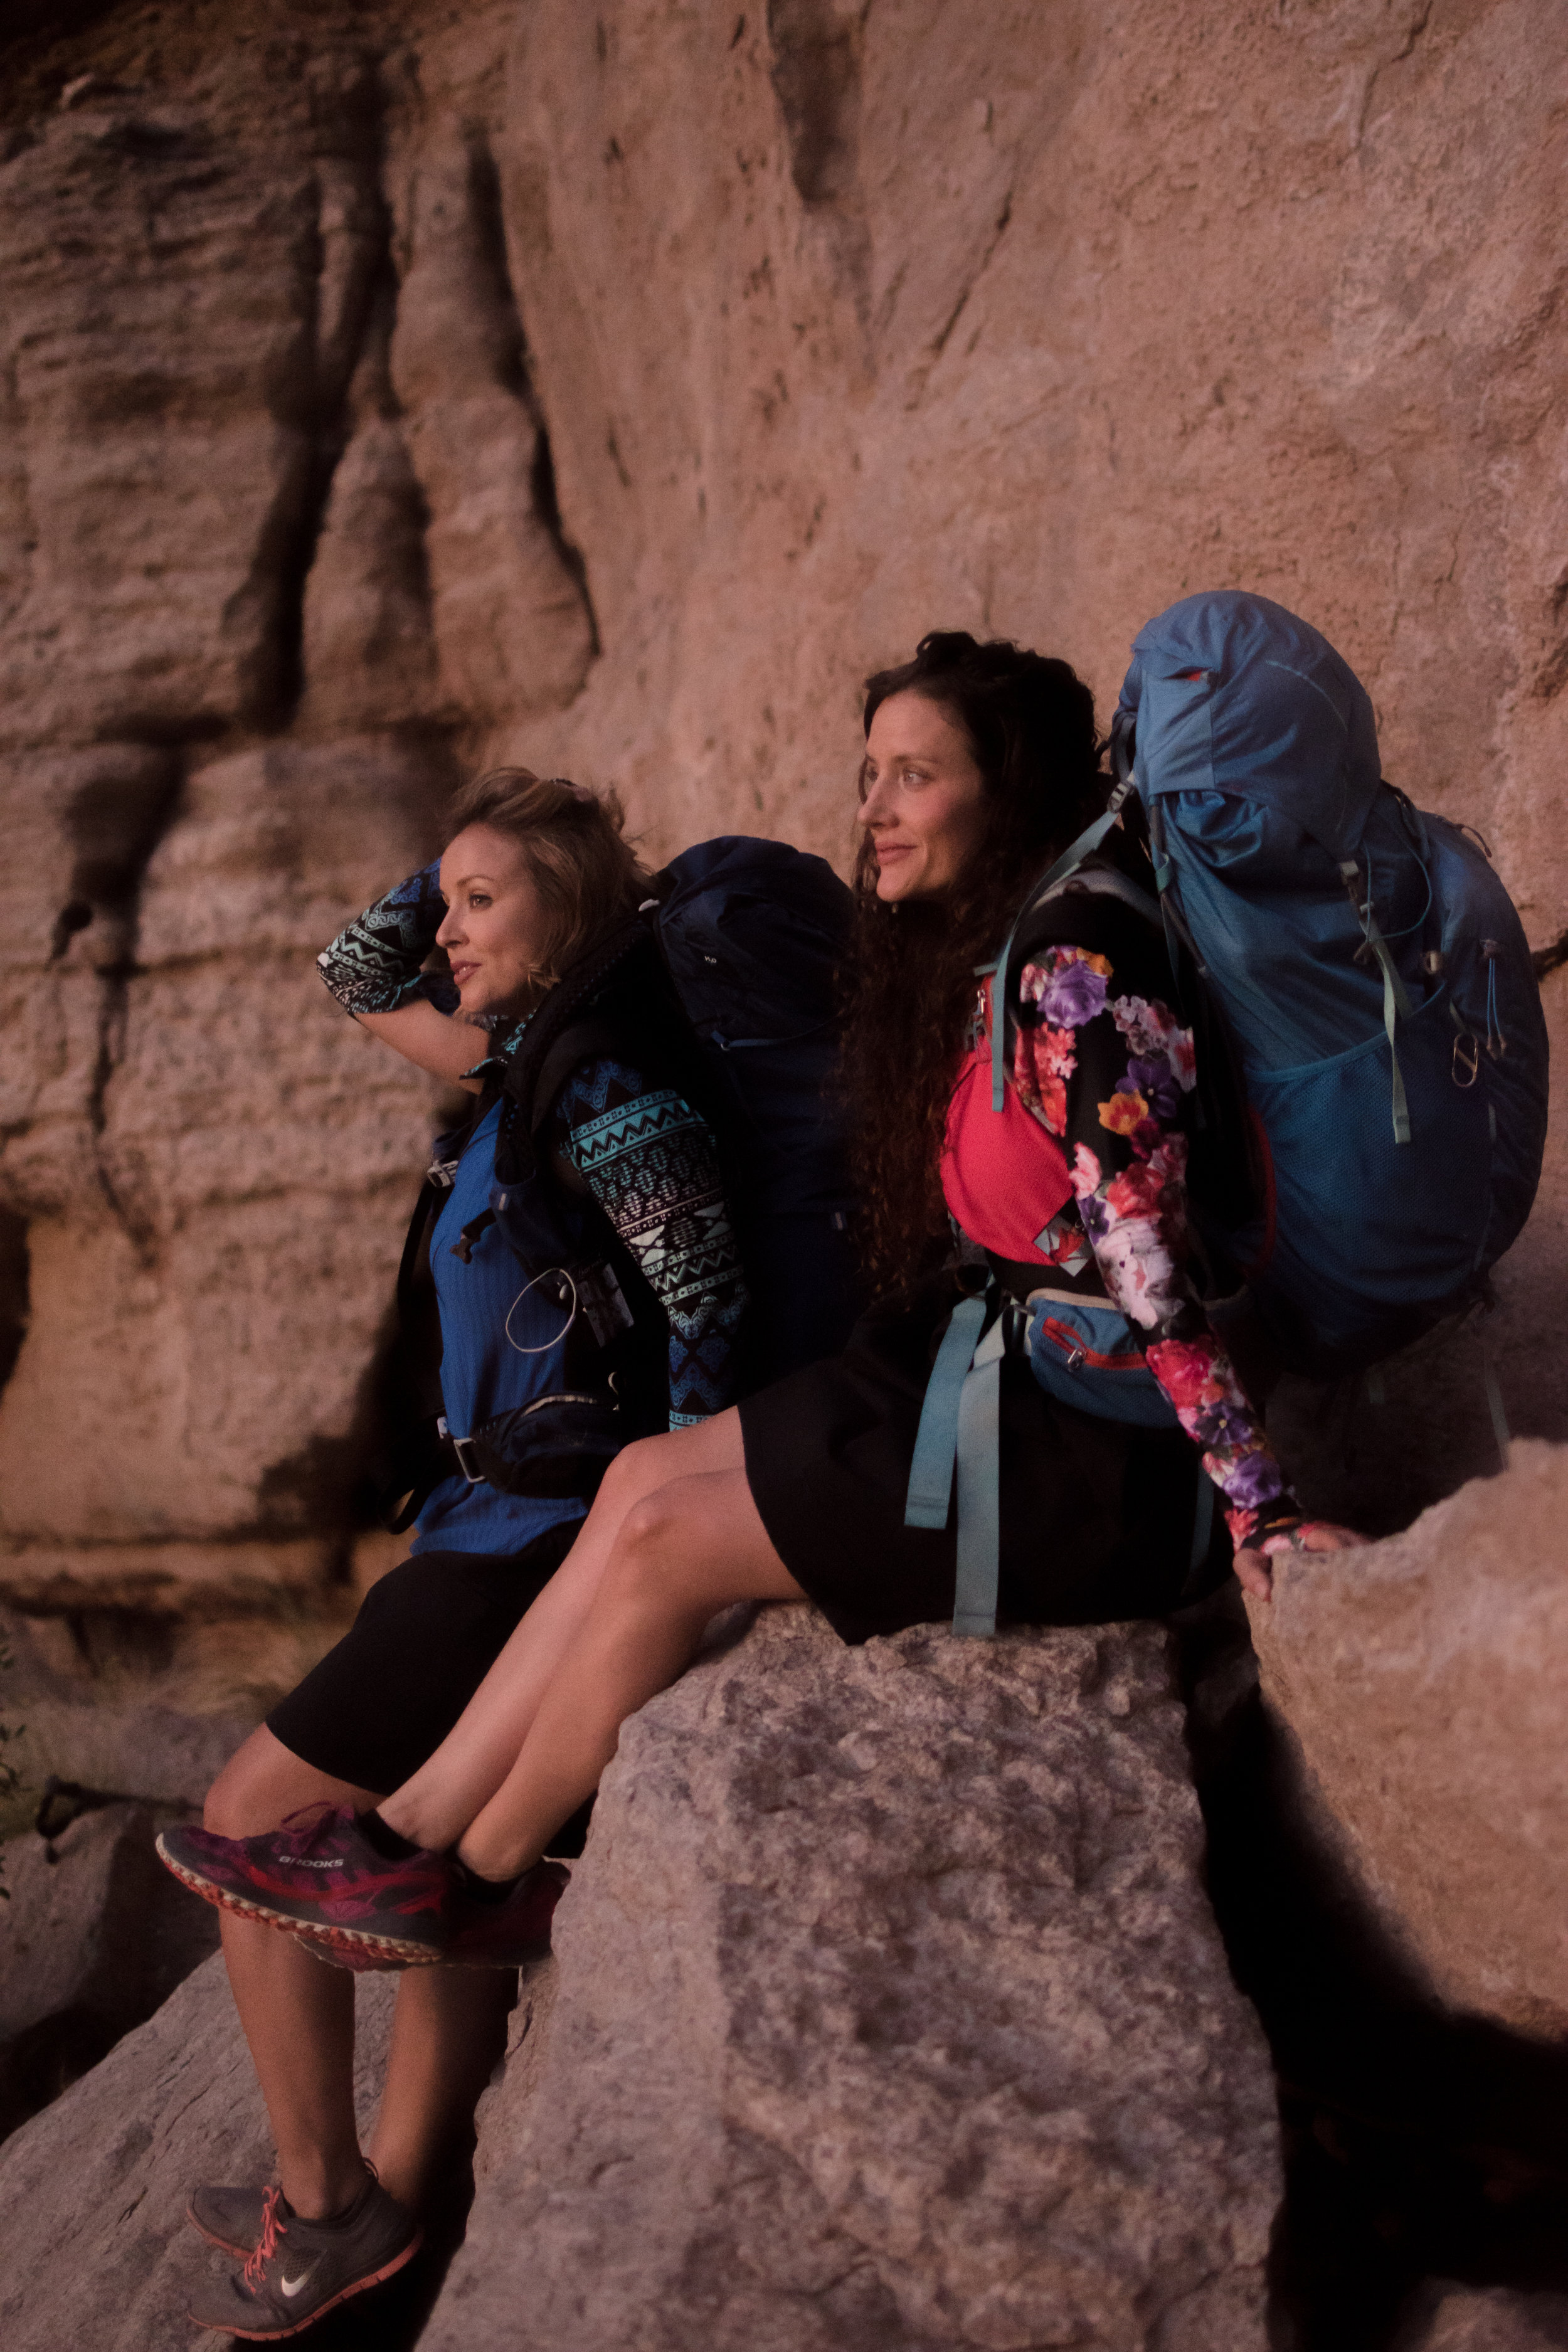 NAVISKIN Women’s Outdoor Hiking Dress